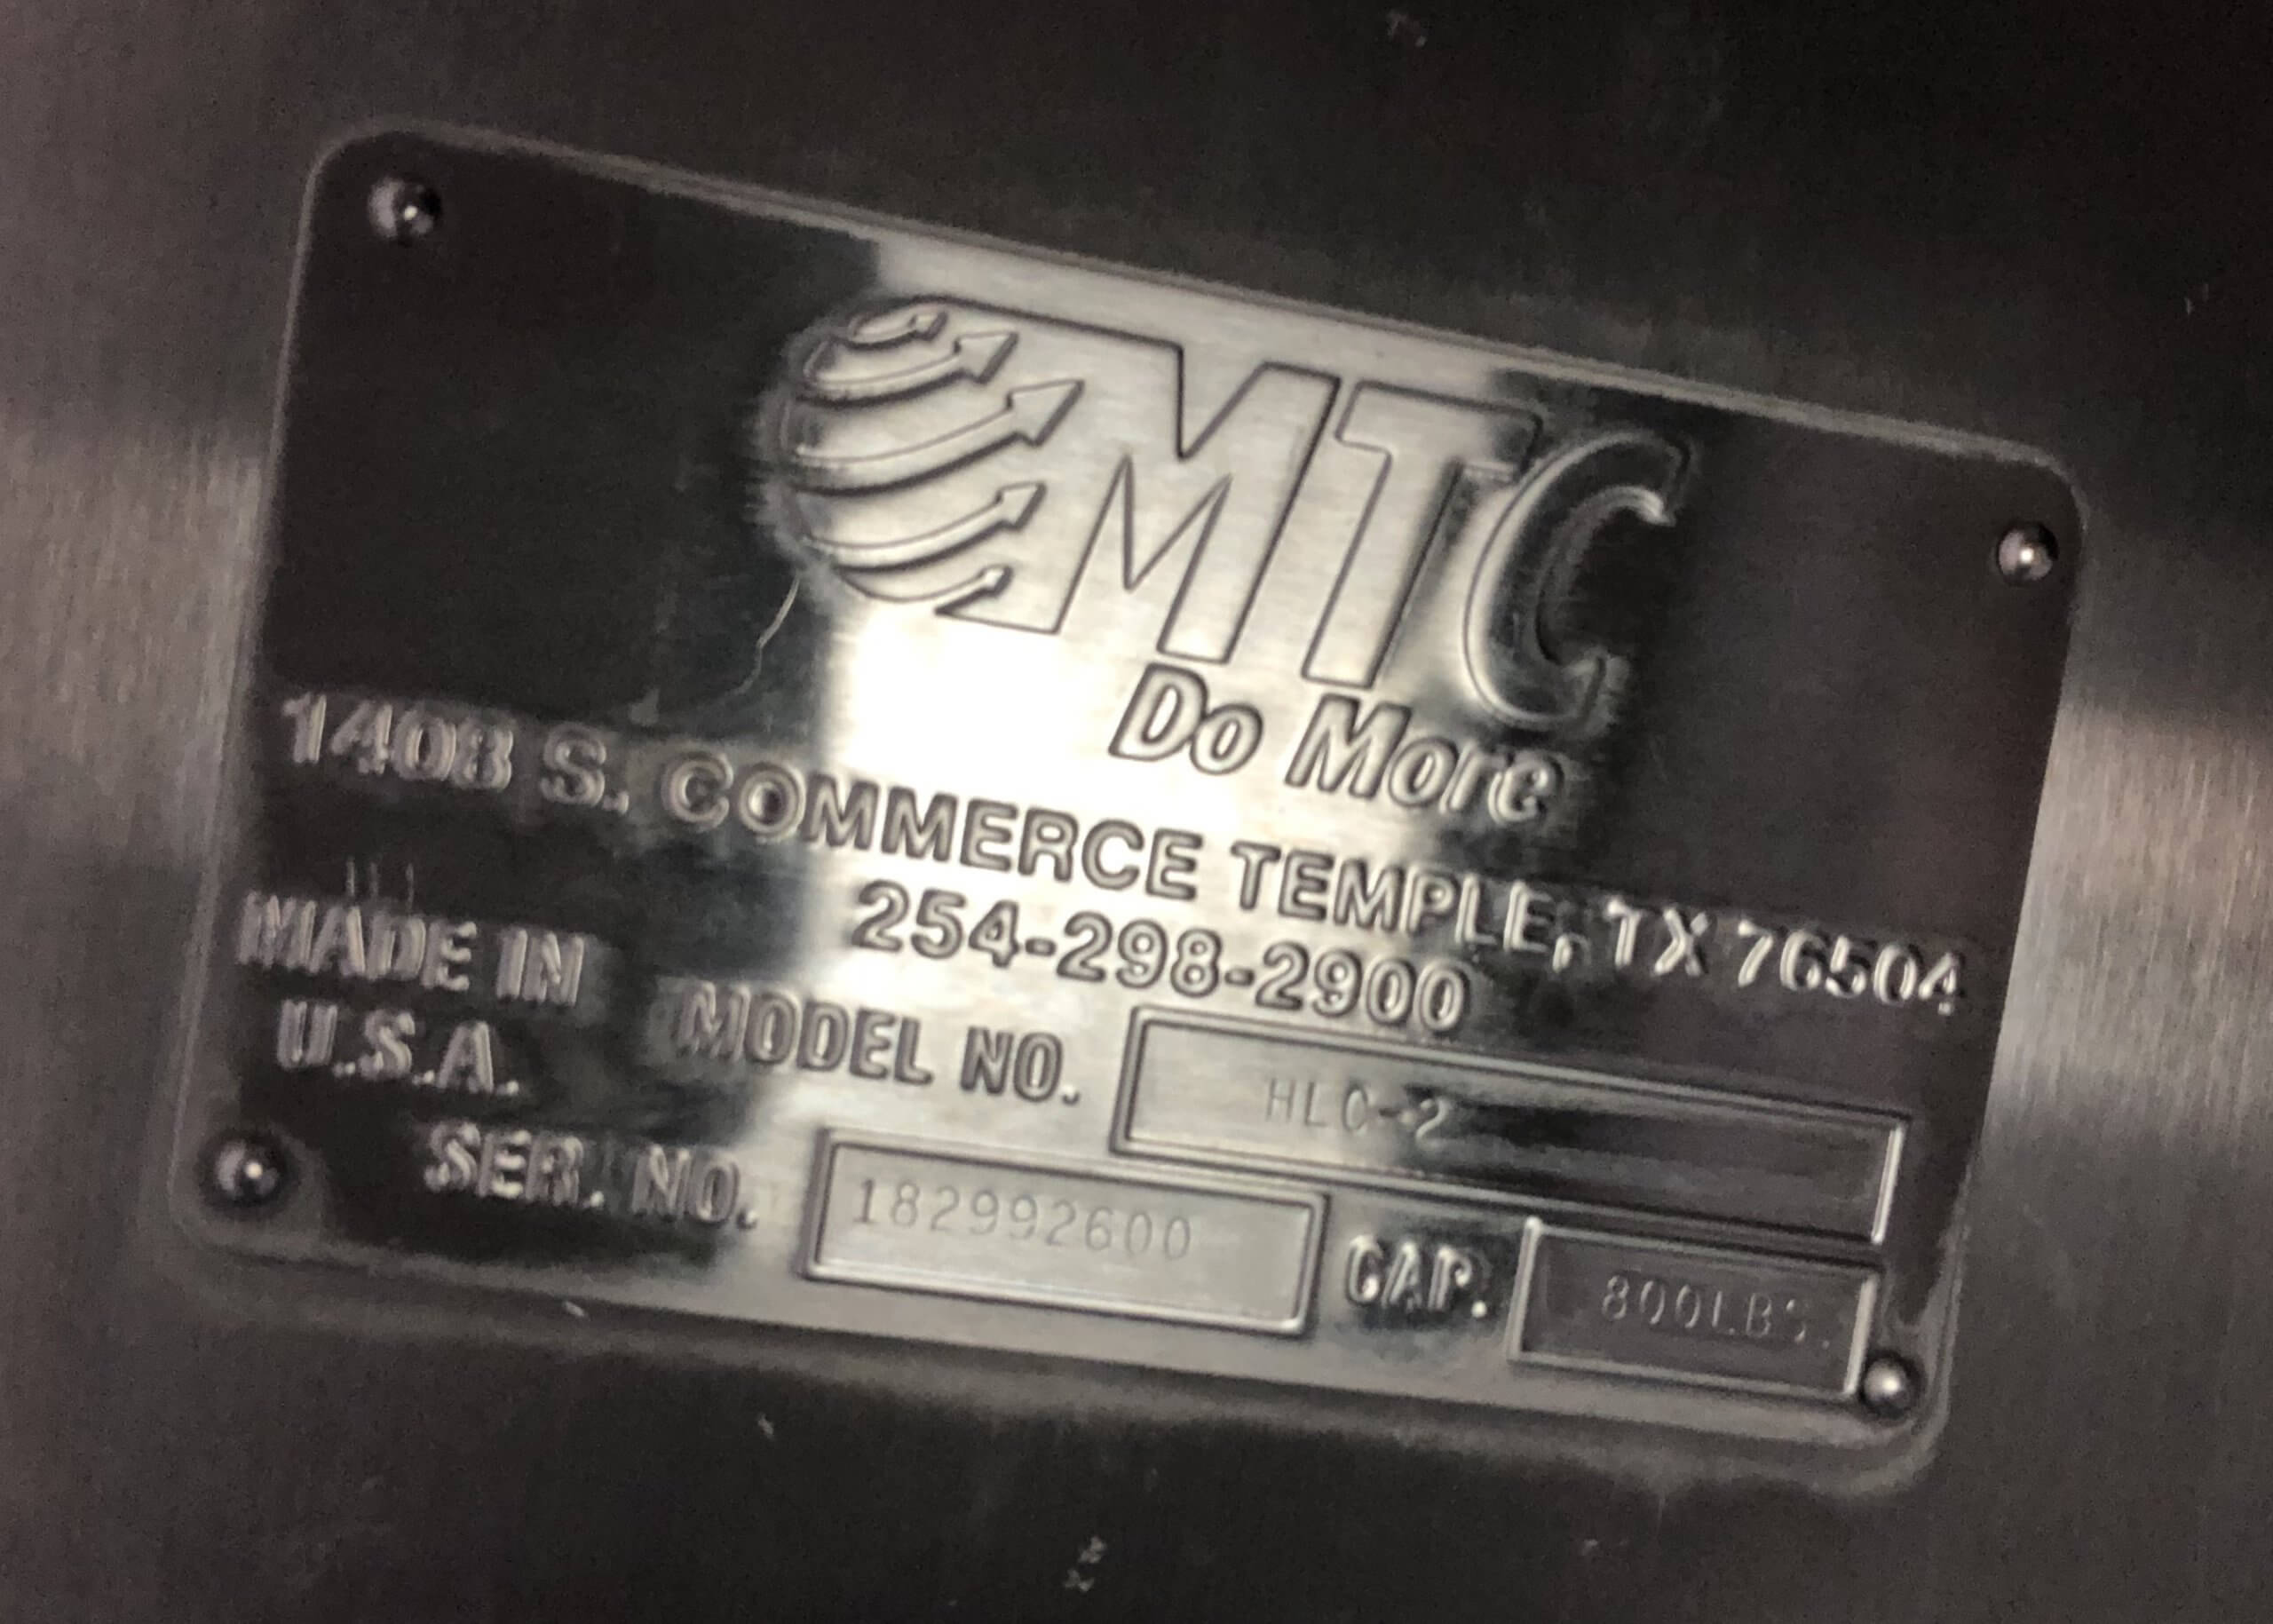 MTC HLC-2 Cart Lift | M&M Equipment Corp